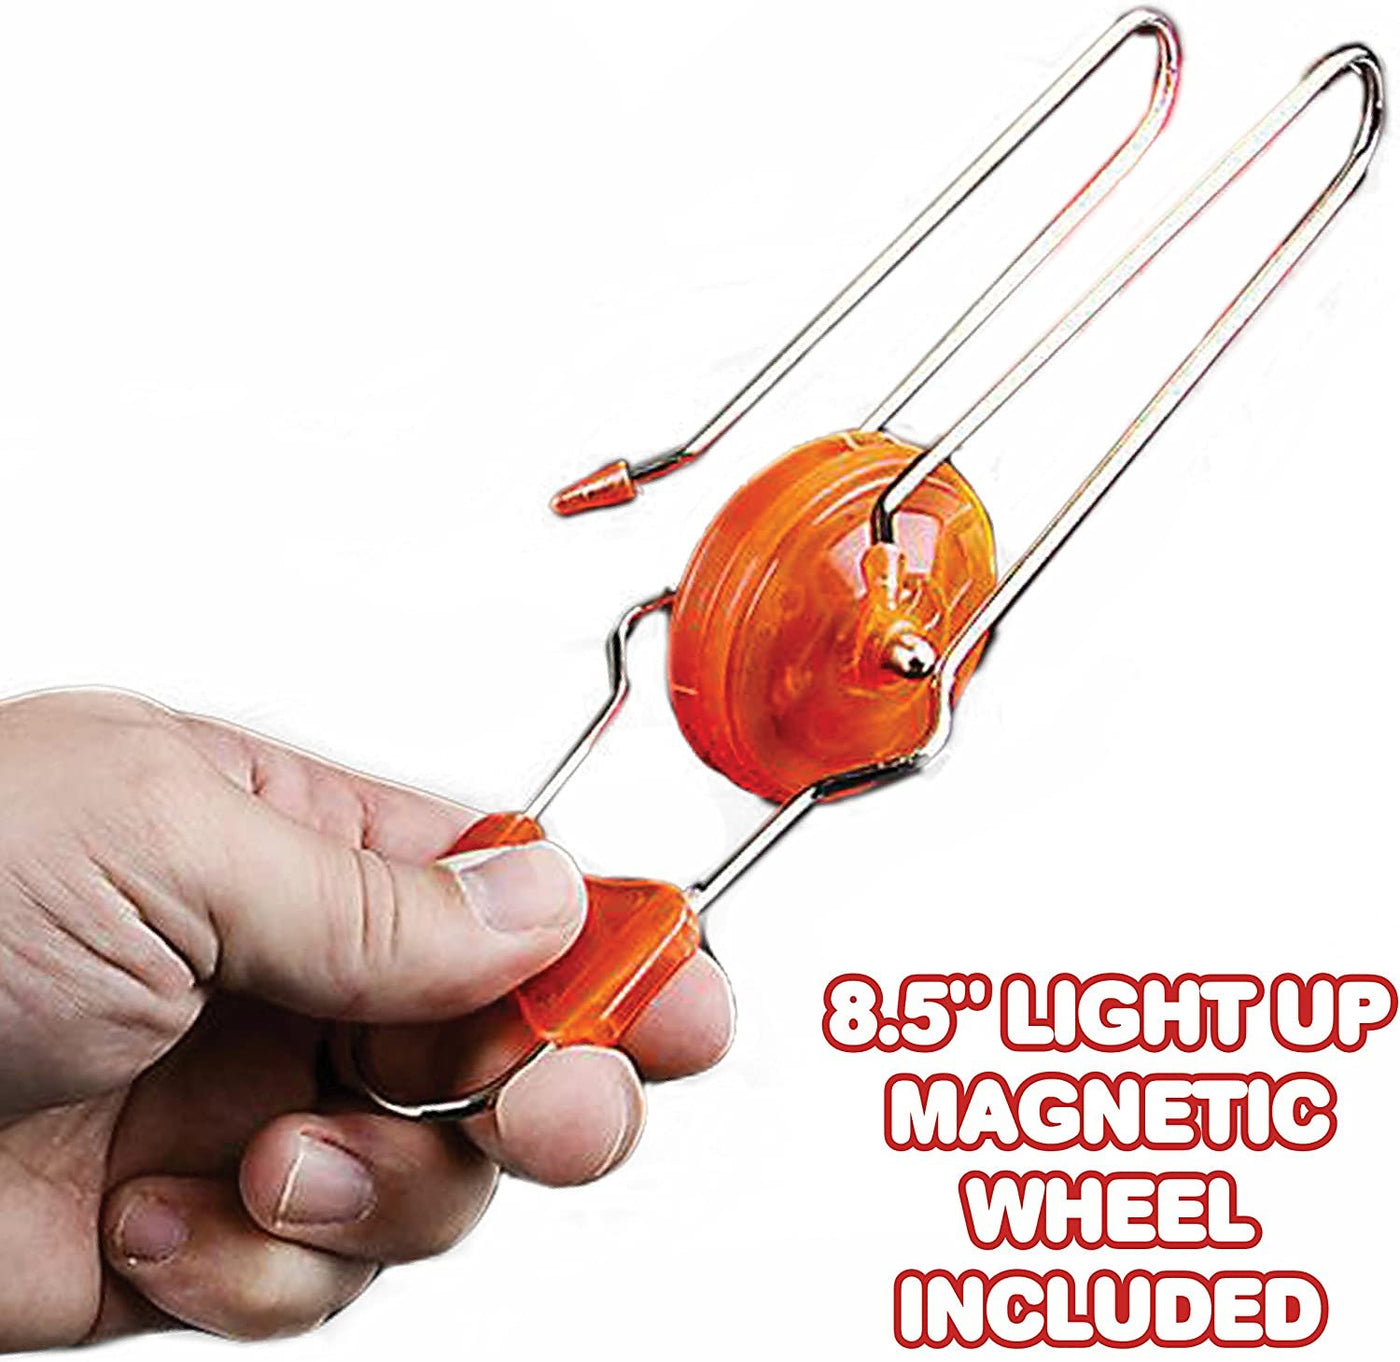 8" Gyro Wheel Retro Light Up Kids Toy with Flashing Lights